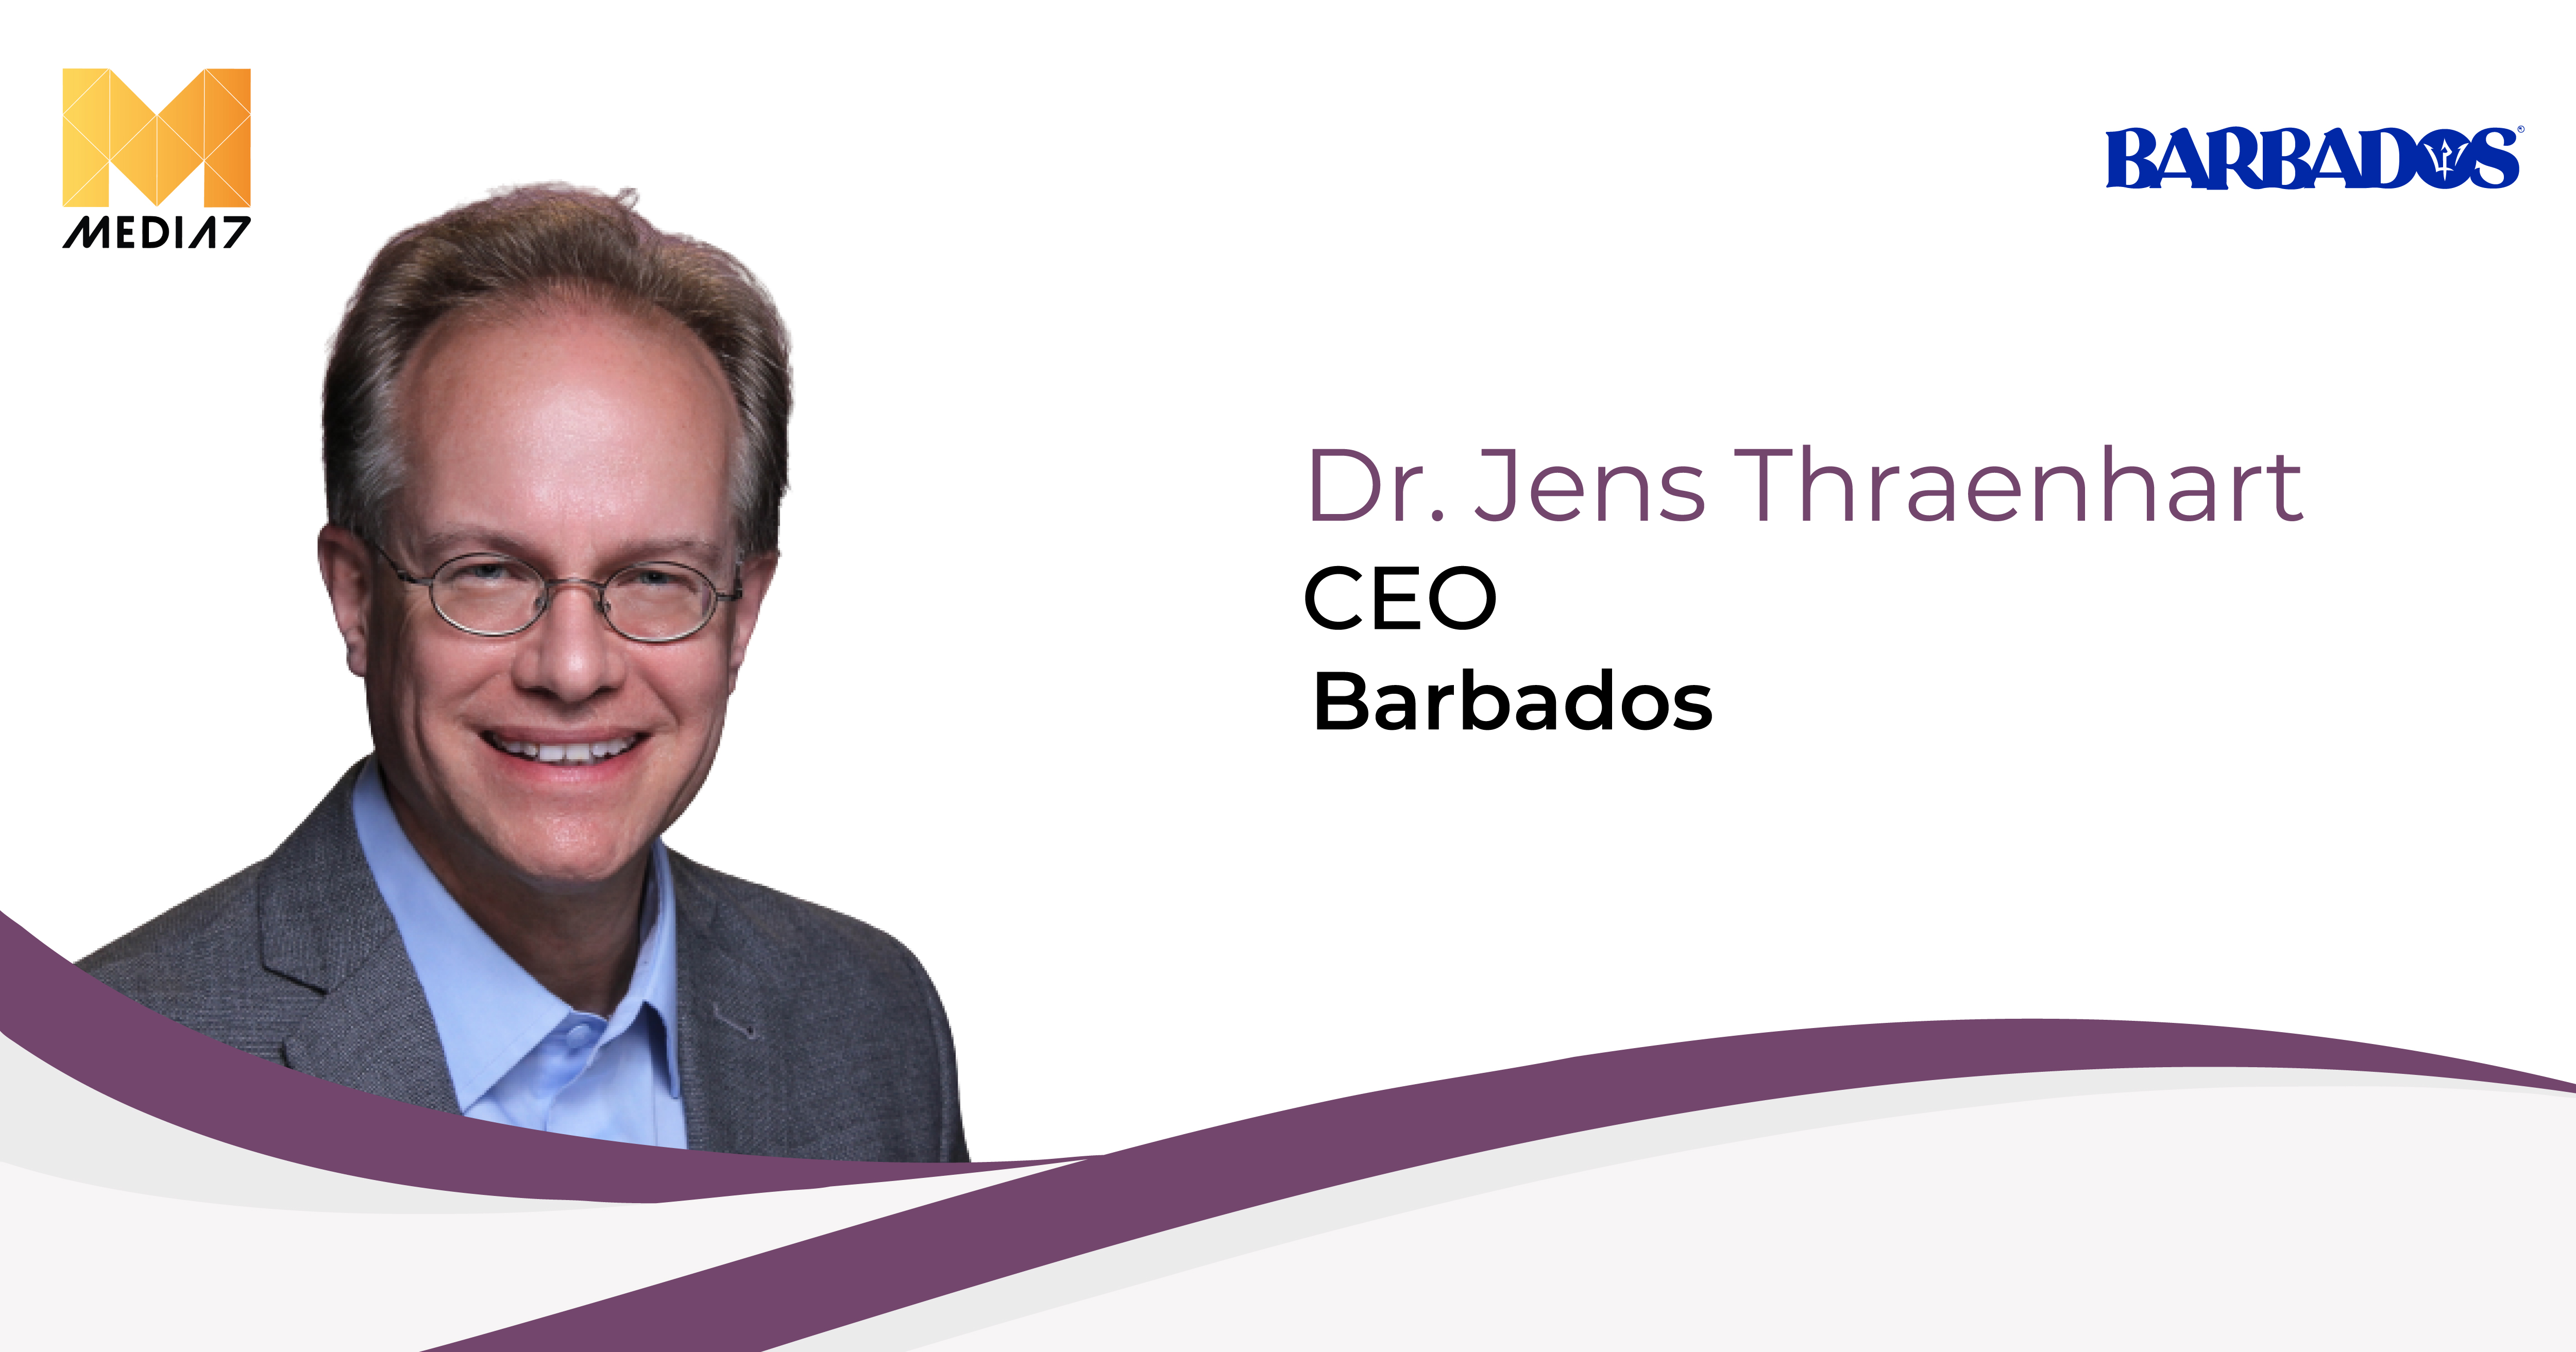 Dr. Jens Thraenhart